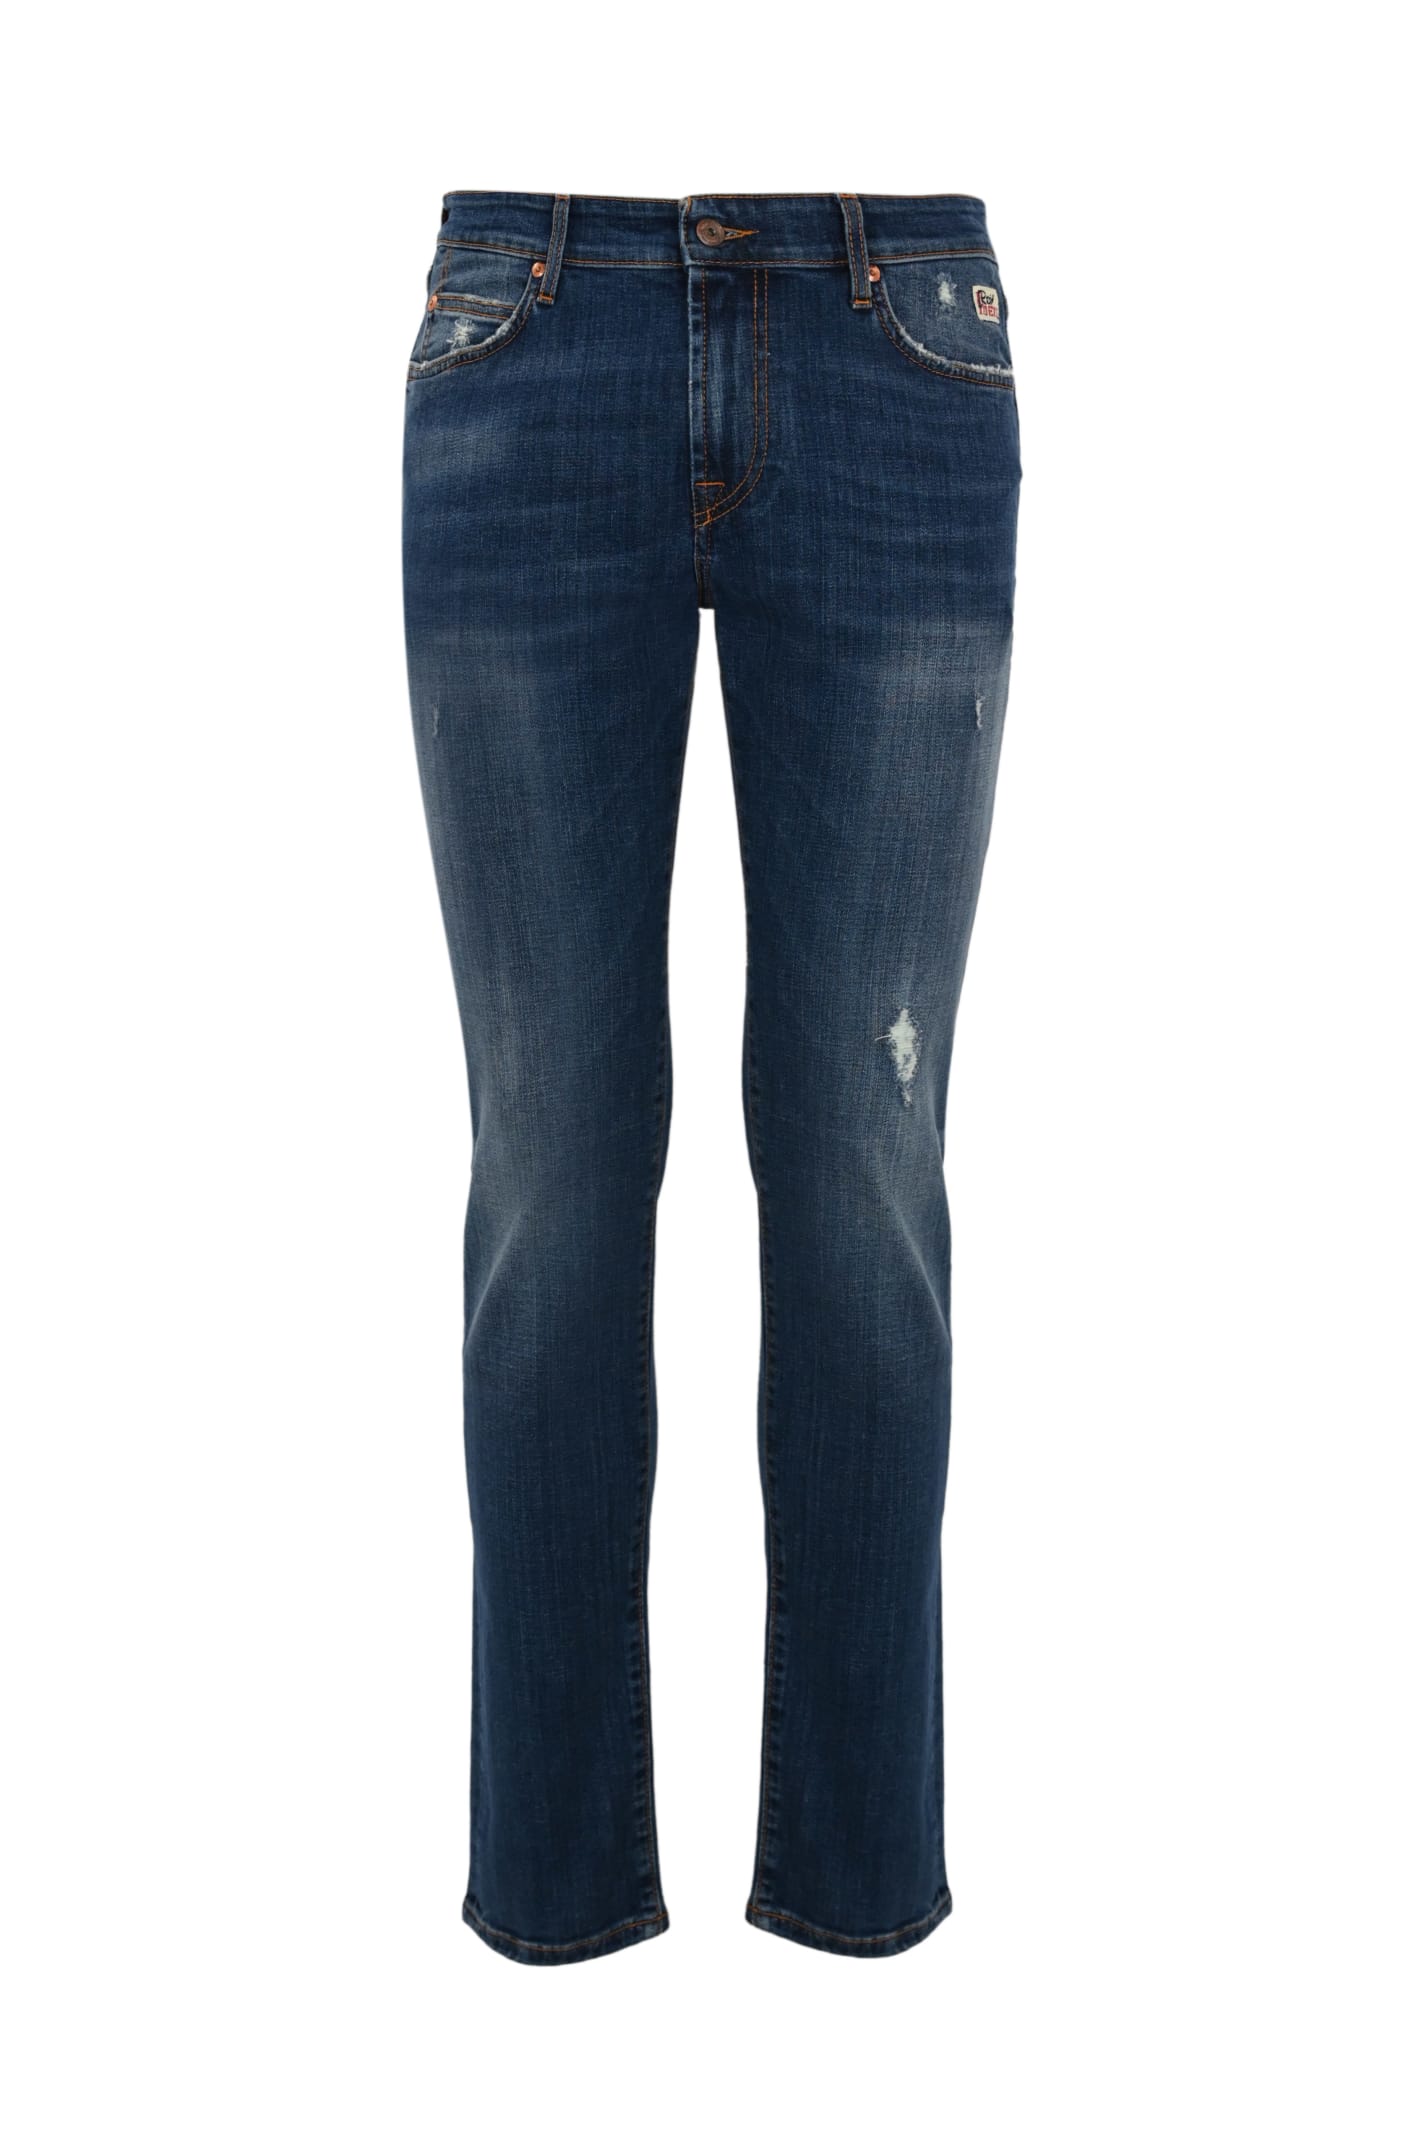 Roy Rogers 517 Jeans In Dark Denim